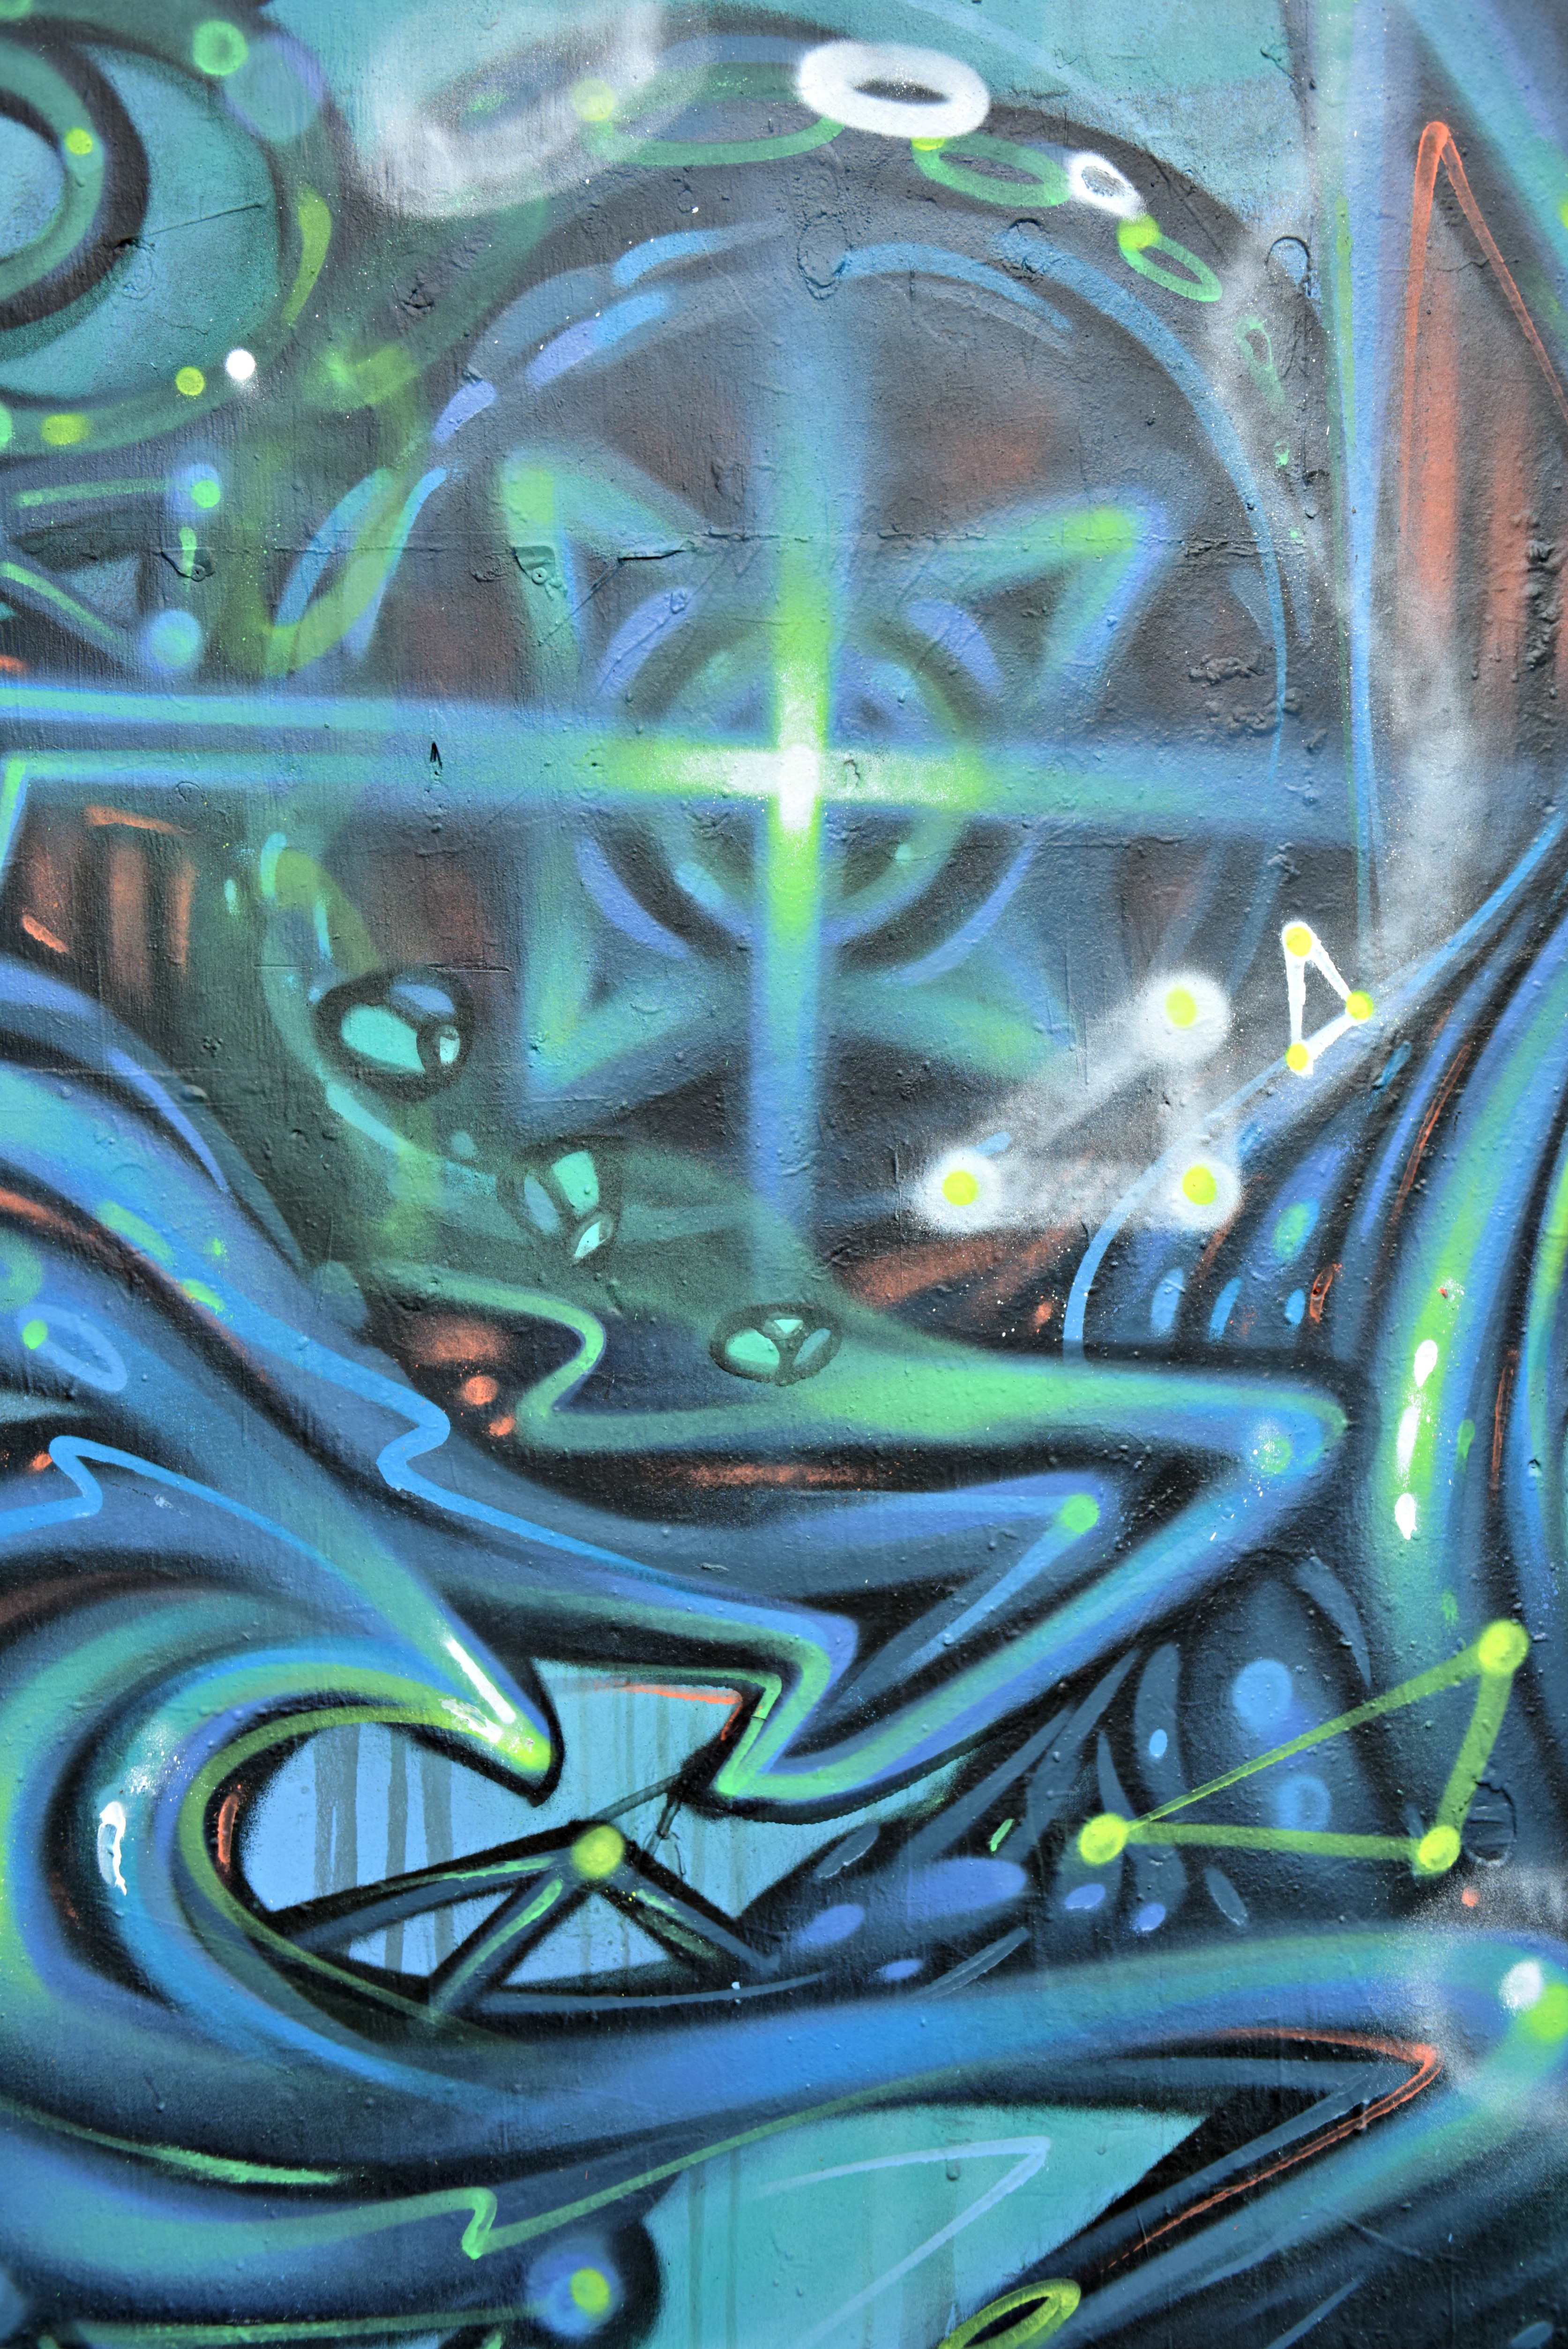 <img src="ana.jpg" alt="ana turquoise alien street art wall"> 